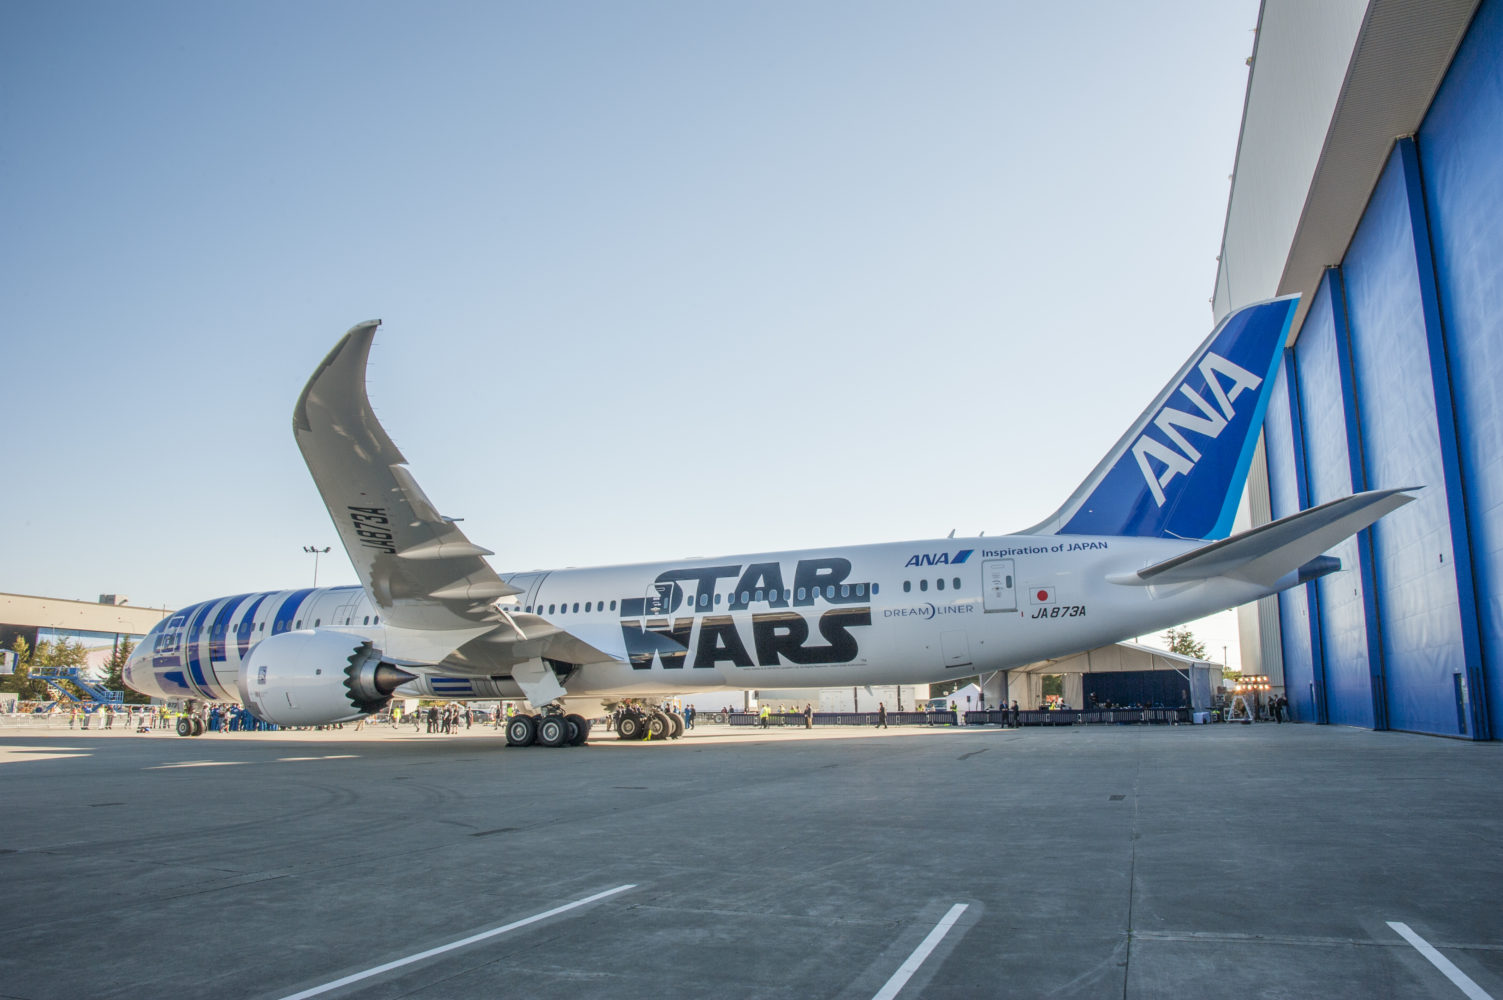 Sneak Peek At Ana S Star Wars Plane Stuck At The Airport